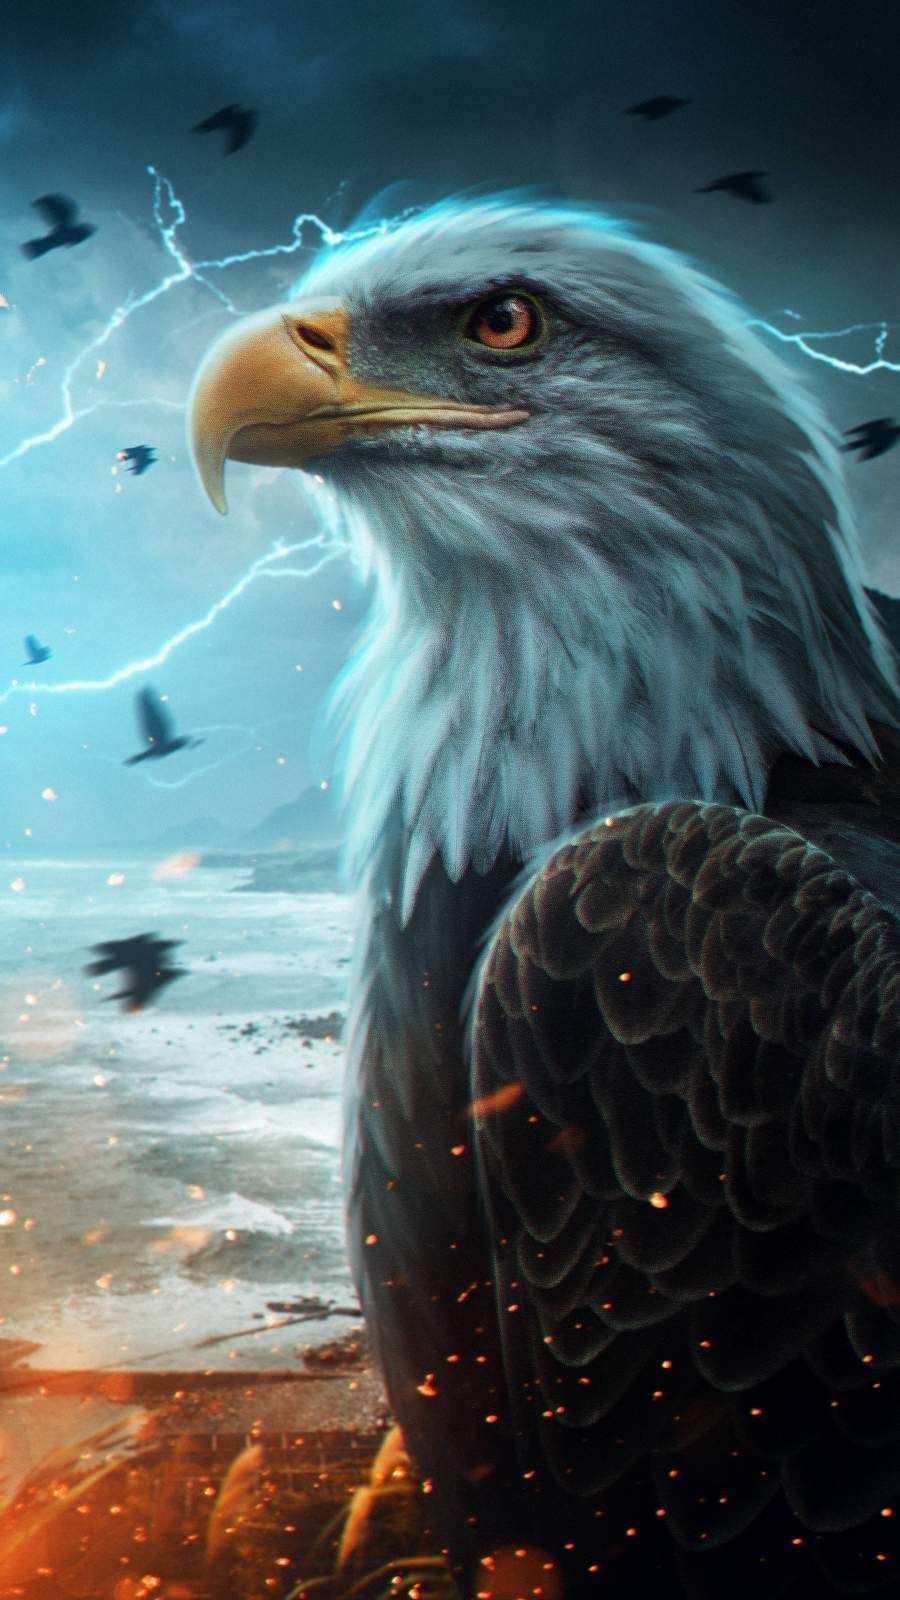 The Predator Eagle iPhone Wallpaper. Eagle wallpaper, Wild animal wallpaper, Eagle picture